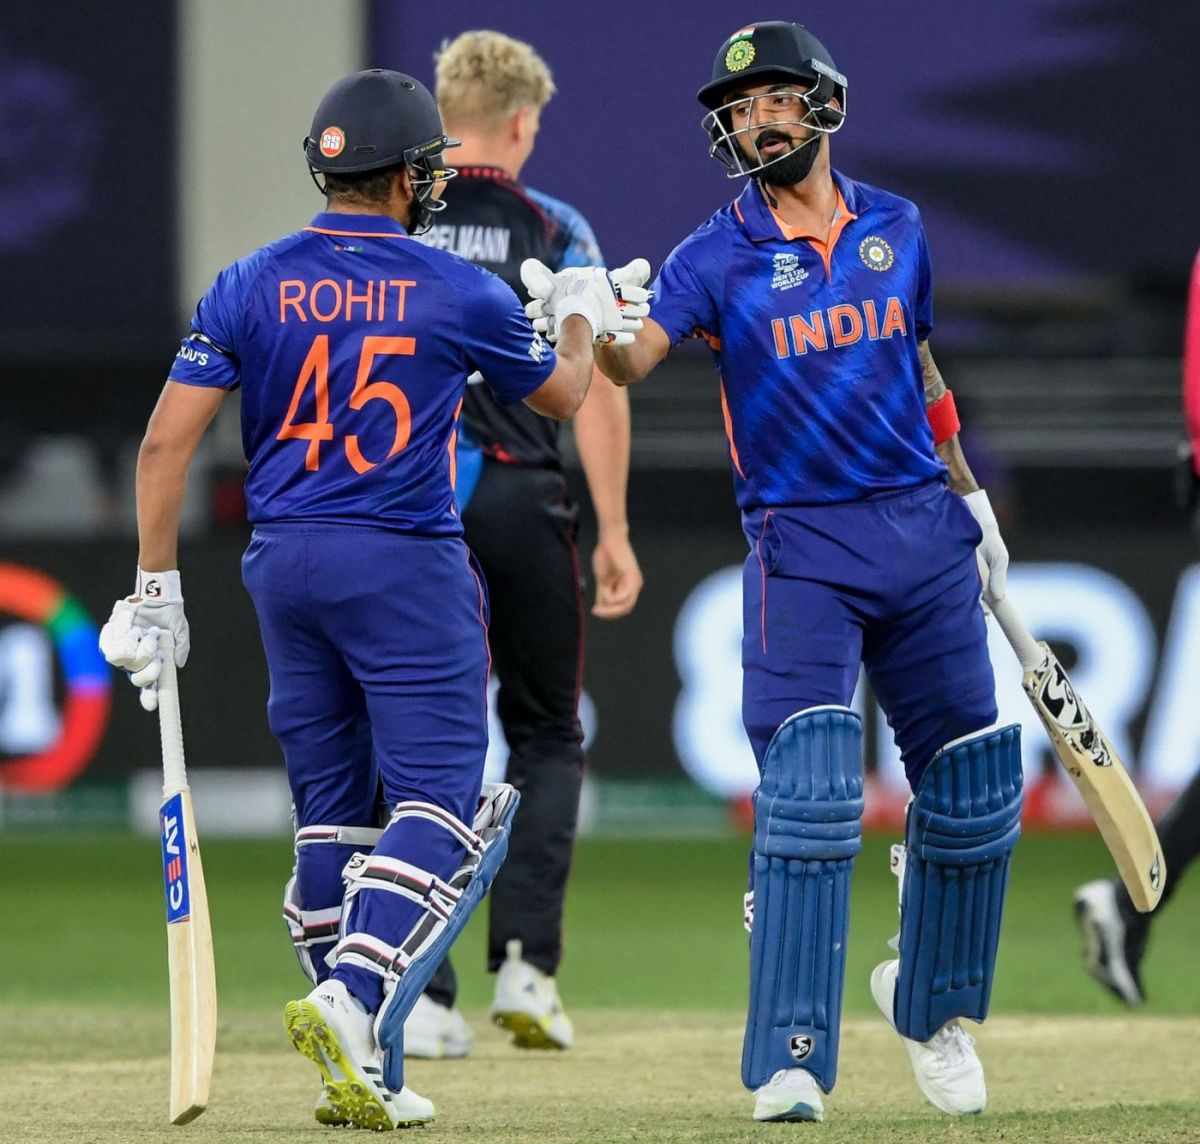 Rohit Sharma and KL Rahul gave India another good start, India vs Namibia, T20 World Cup, Group 2, Dubai, November 8, 2021